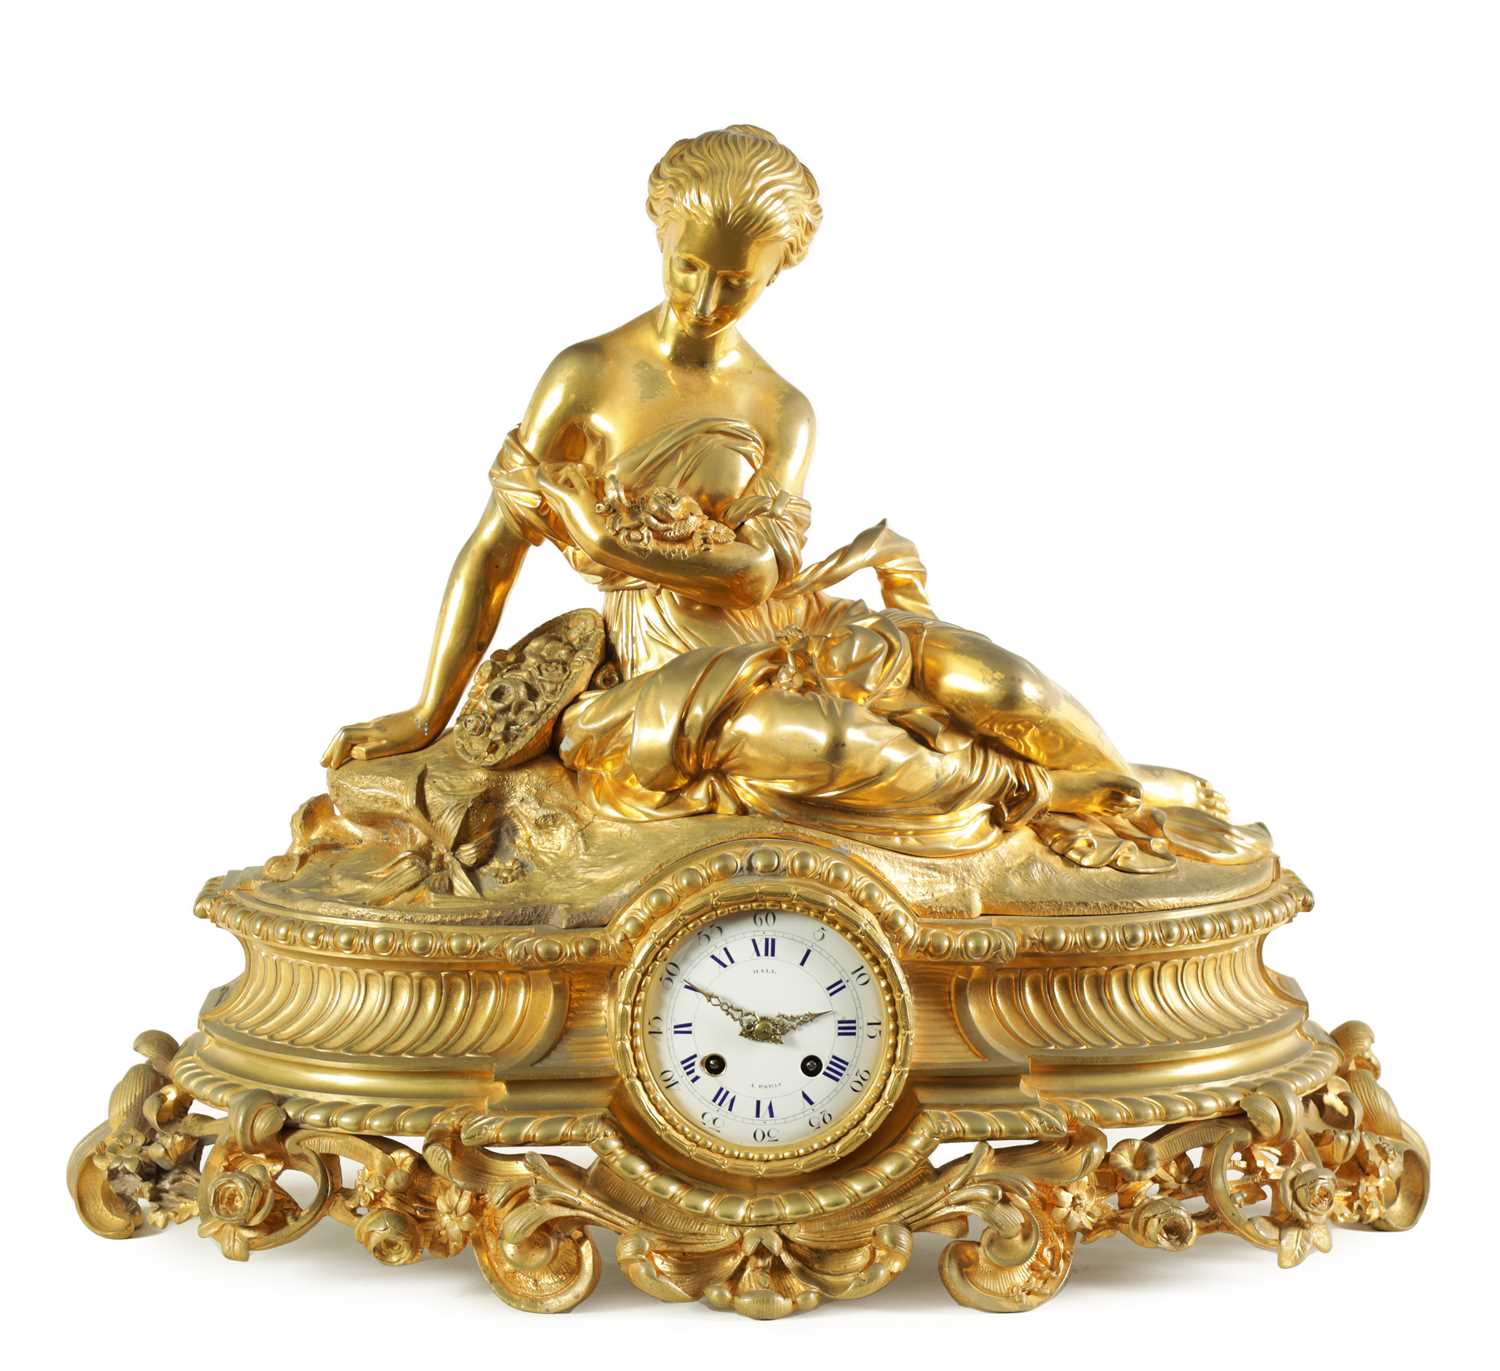 A LARGE 19TH CENTURY FRENCH FIGURAL ORMOLU MANTEL CLOCK